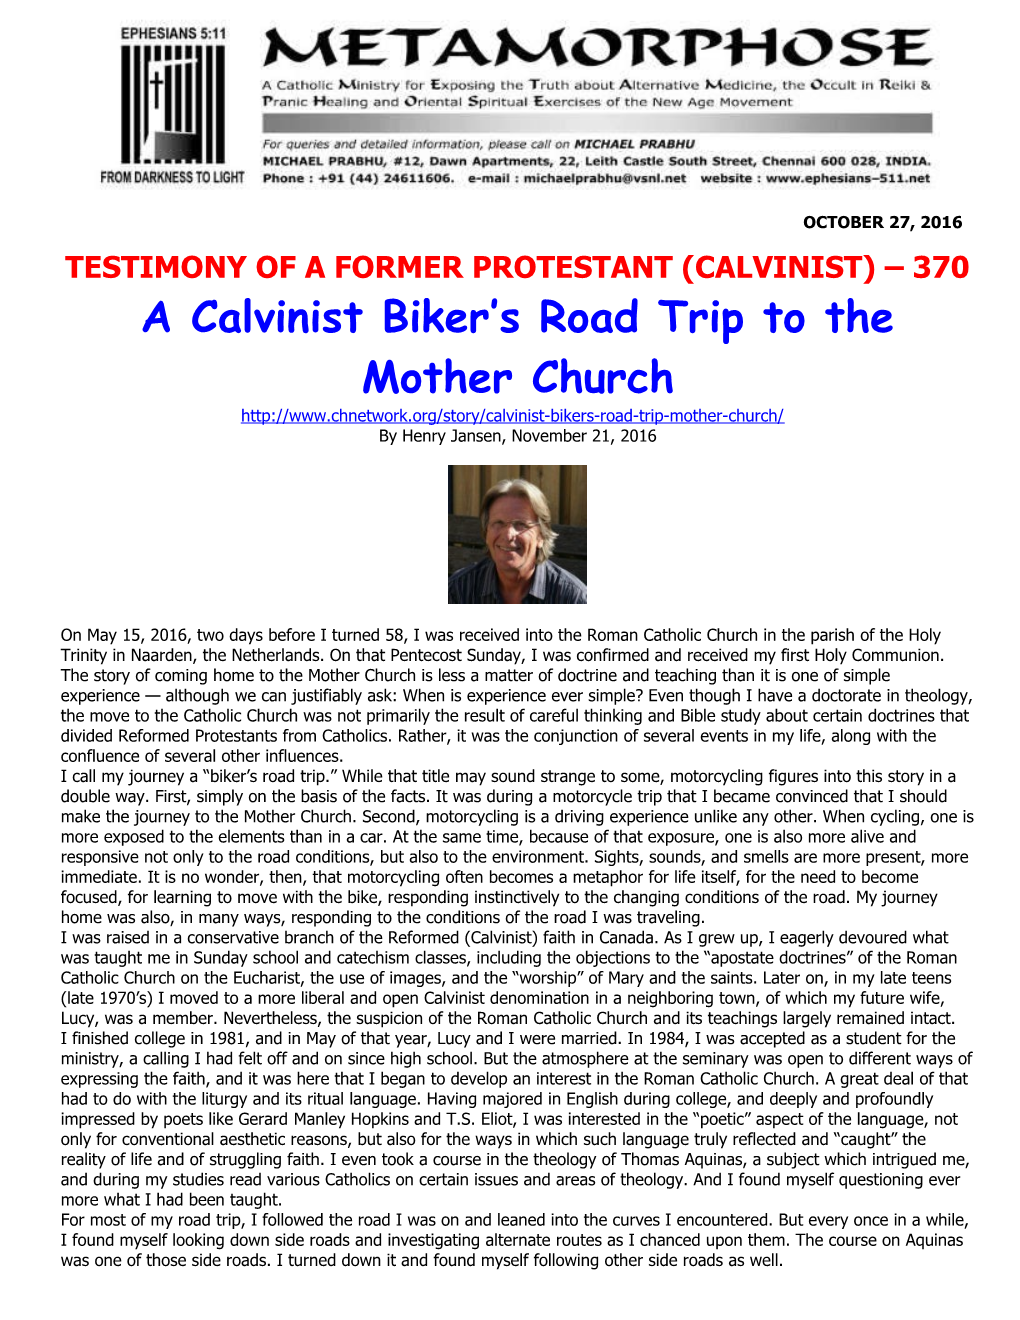 Testimony of a Former Protestant (Calvinist) 370